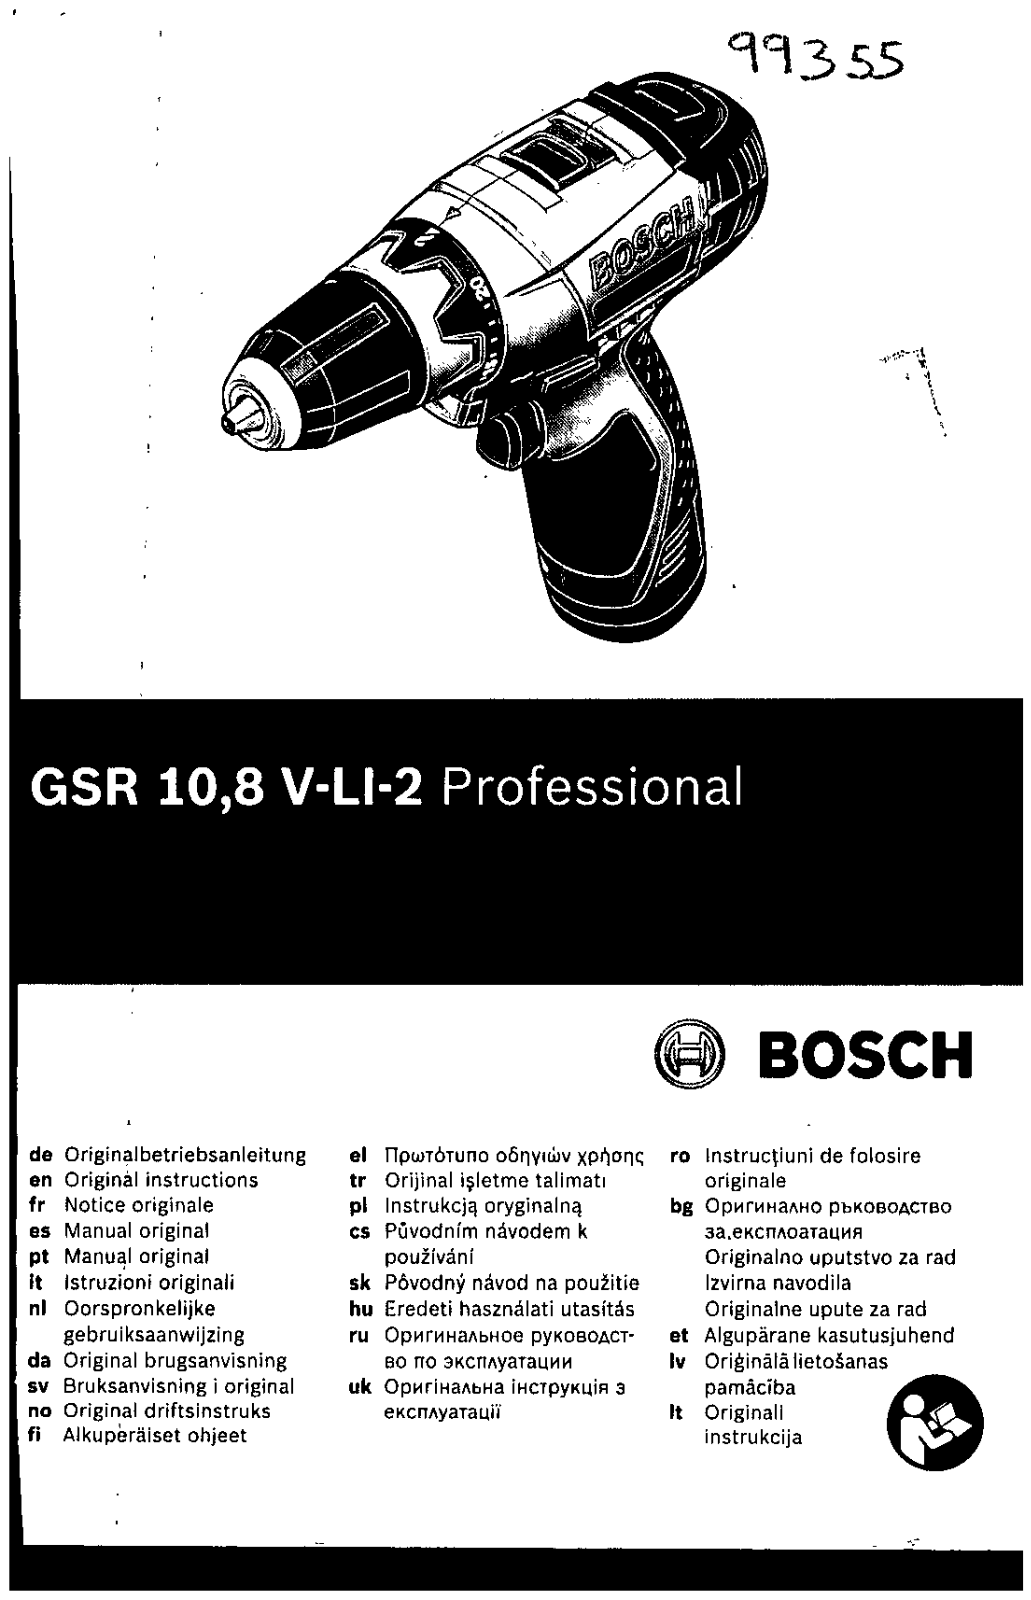 Bosch GSR 10.8 V-LI-2 PROFESSIONAL Owner's Manual